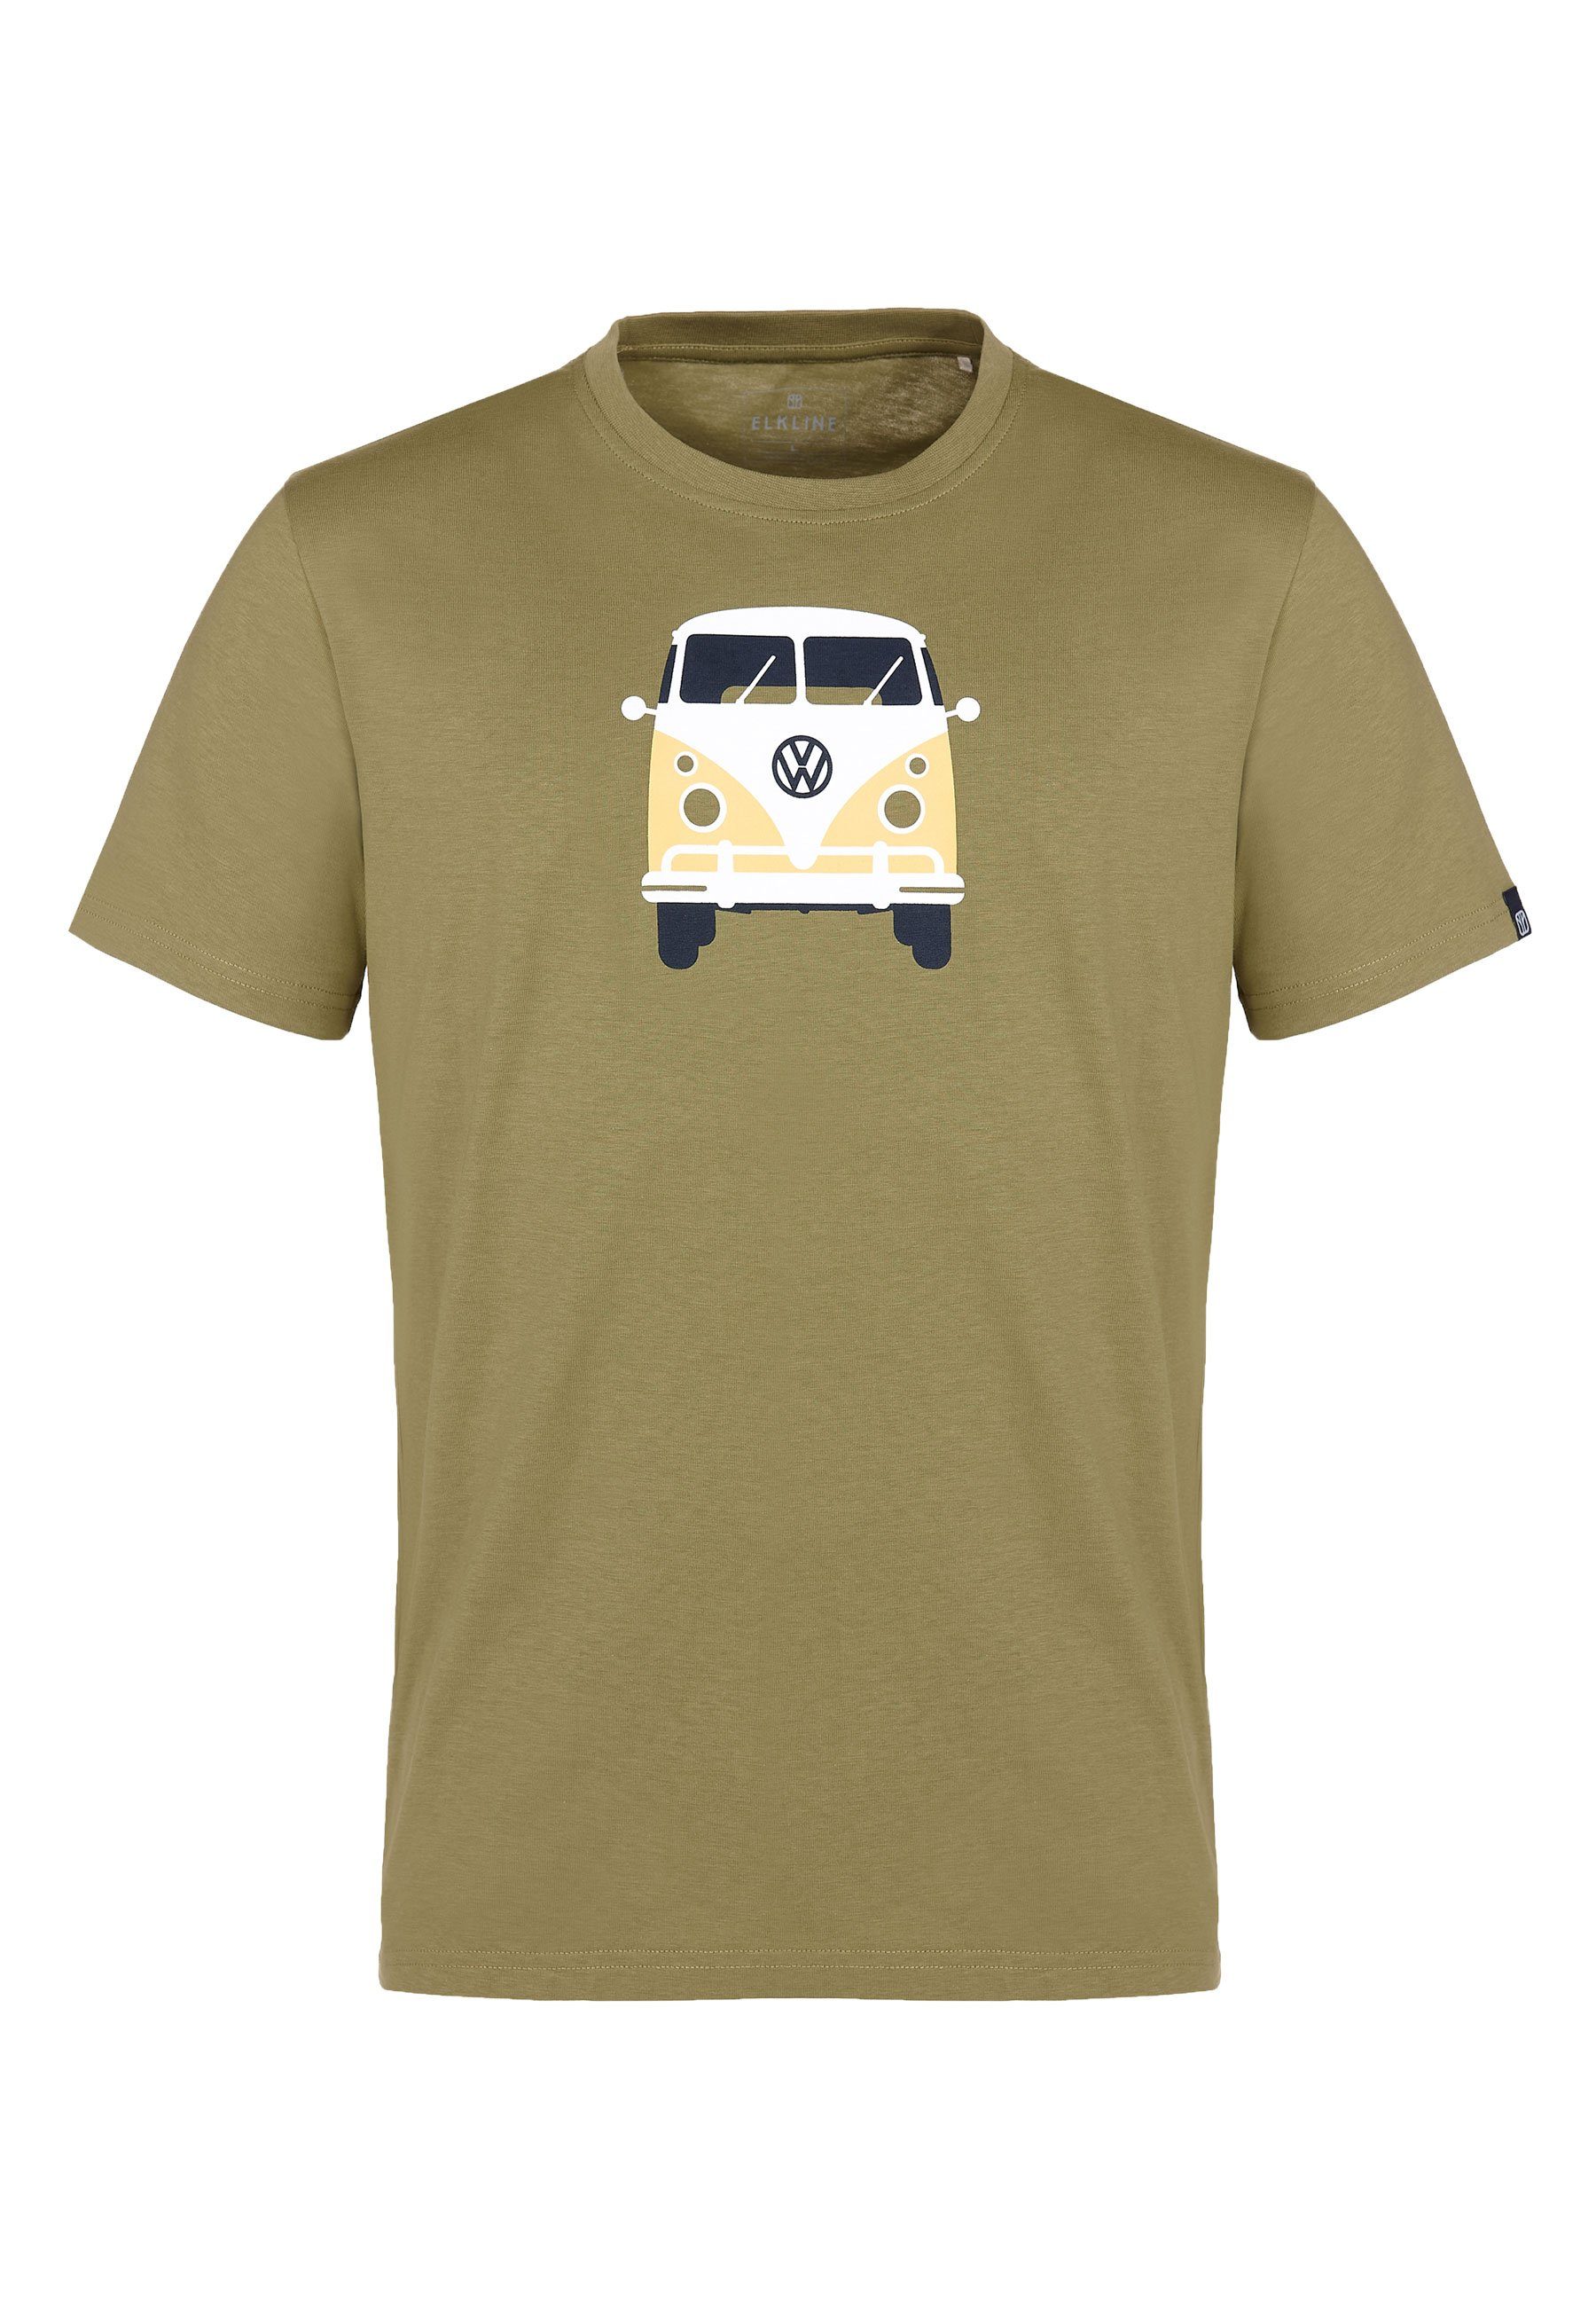 Rücken Print lizenzierter Methusalem Bulli avocado Brust VW Elkline T-Shirt